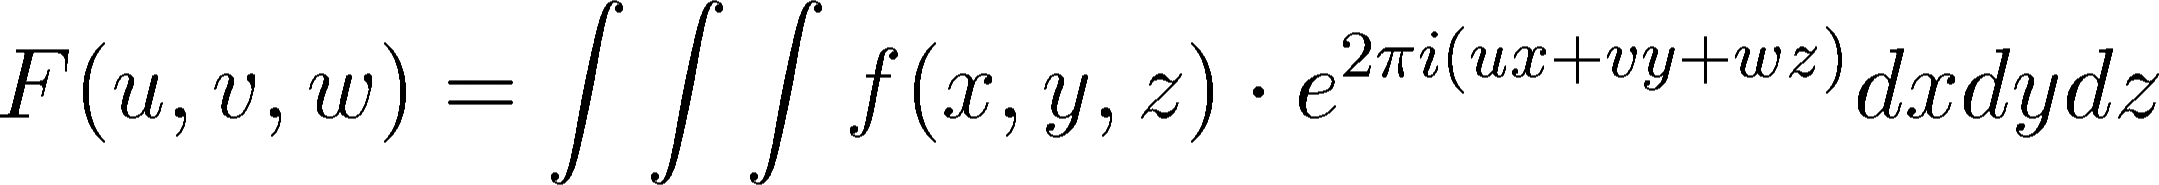 \begin{displaymath}
F(u,v,w)=\int \int \int f(x,y,z)\cdot e^{2\pi i(ux+vy+wz)}dxdydz
\end{displaymath}